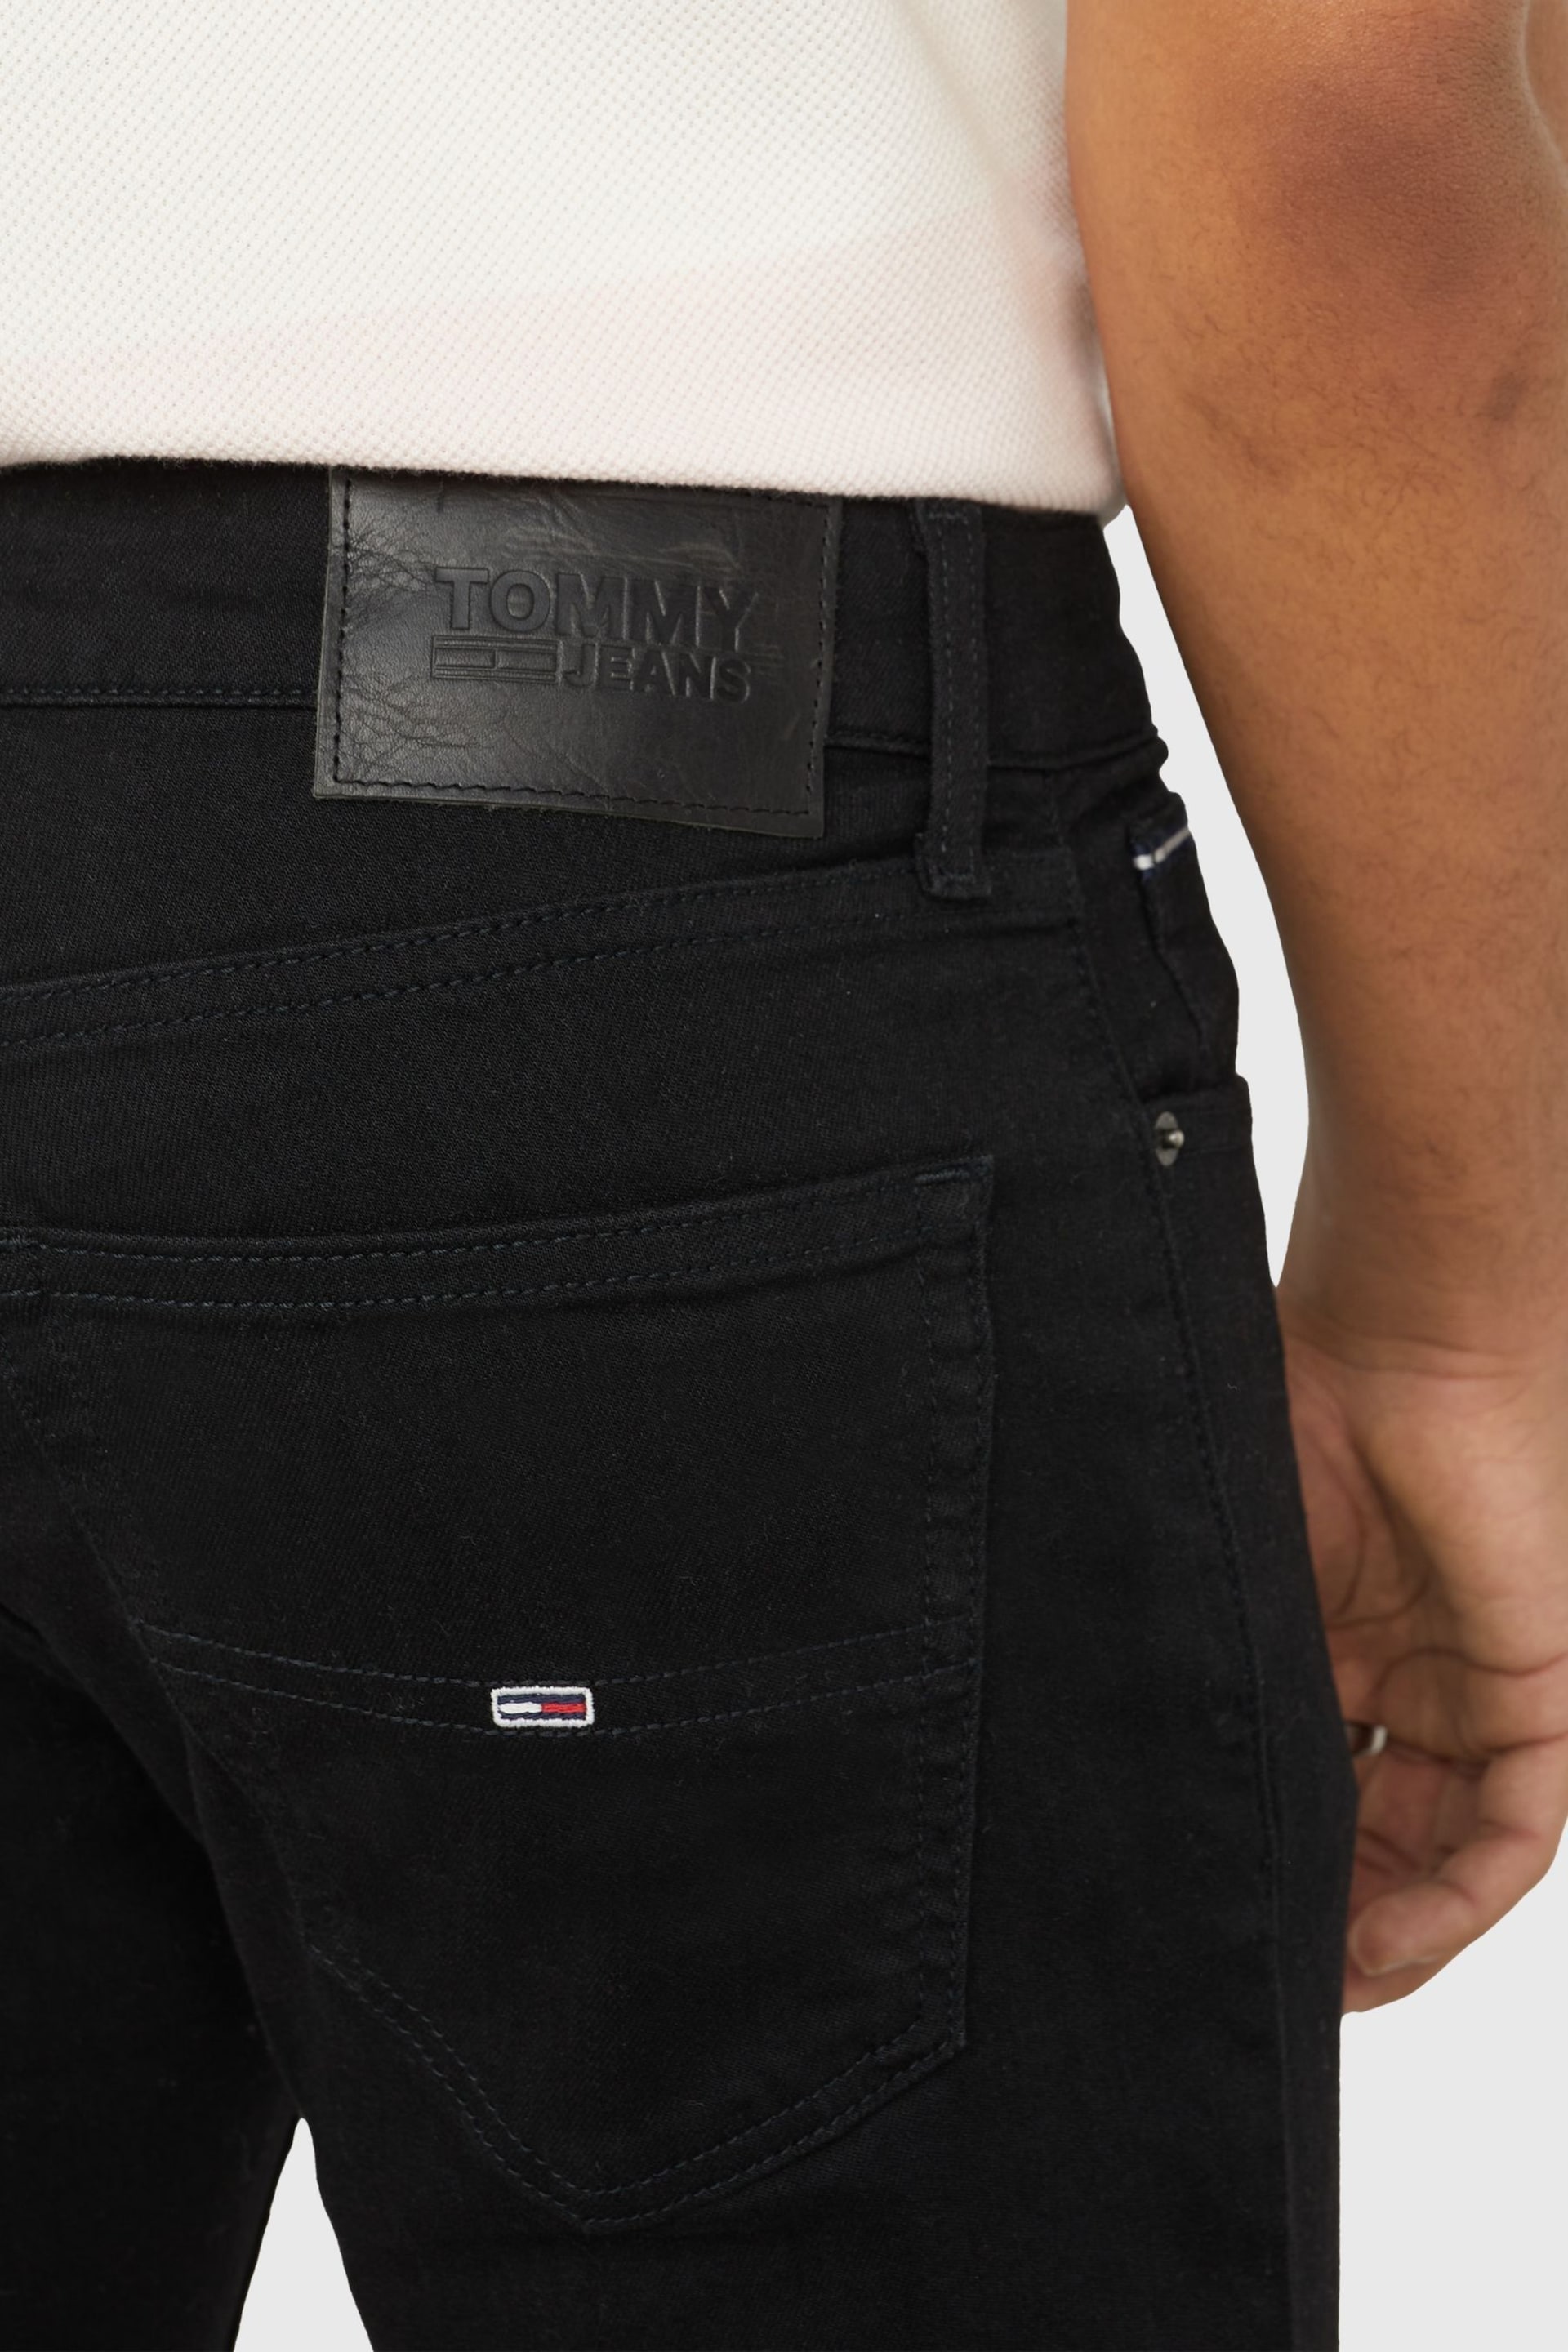 Tommy Jeans Scanton Slim Fit Black Jeans - Image 3 of 4